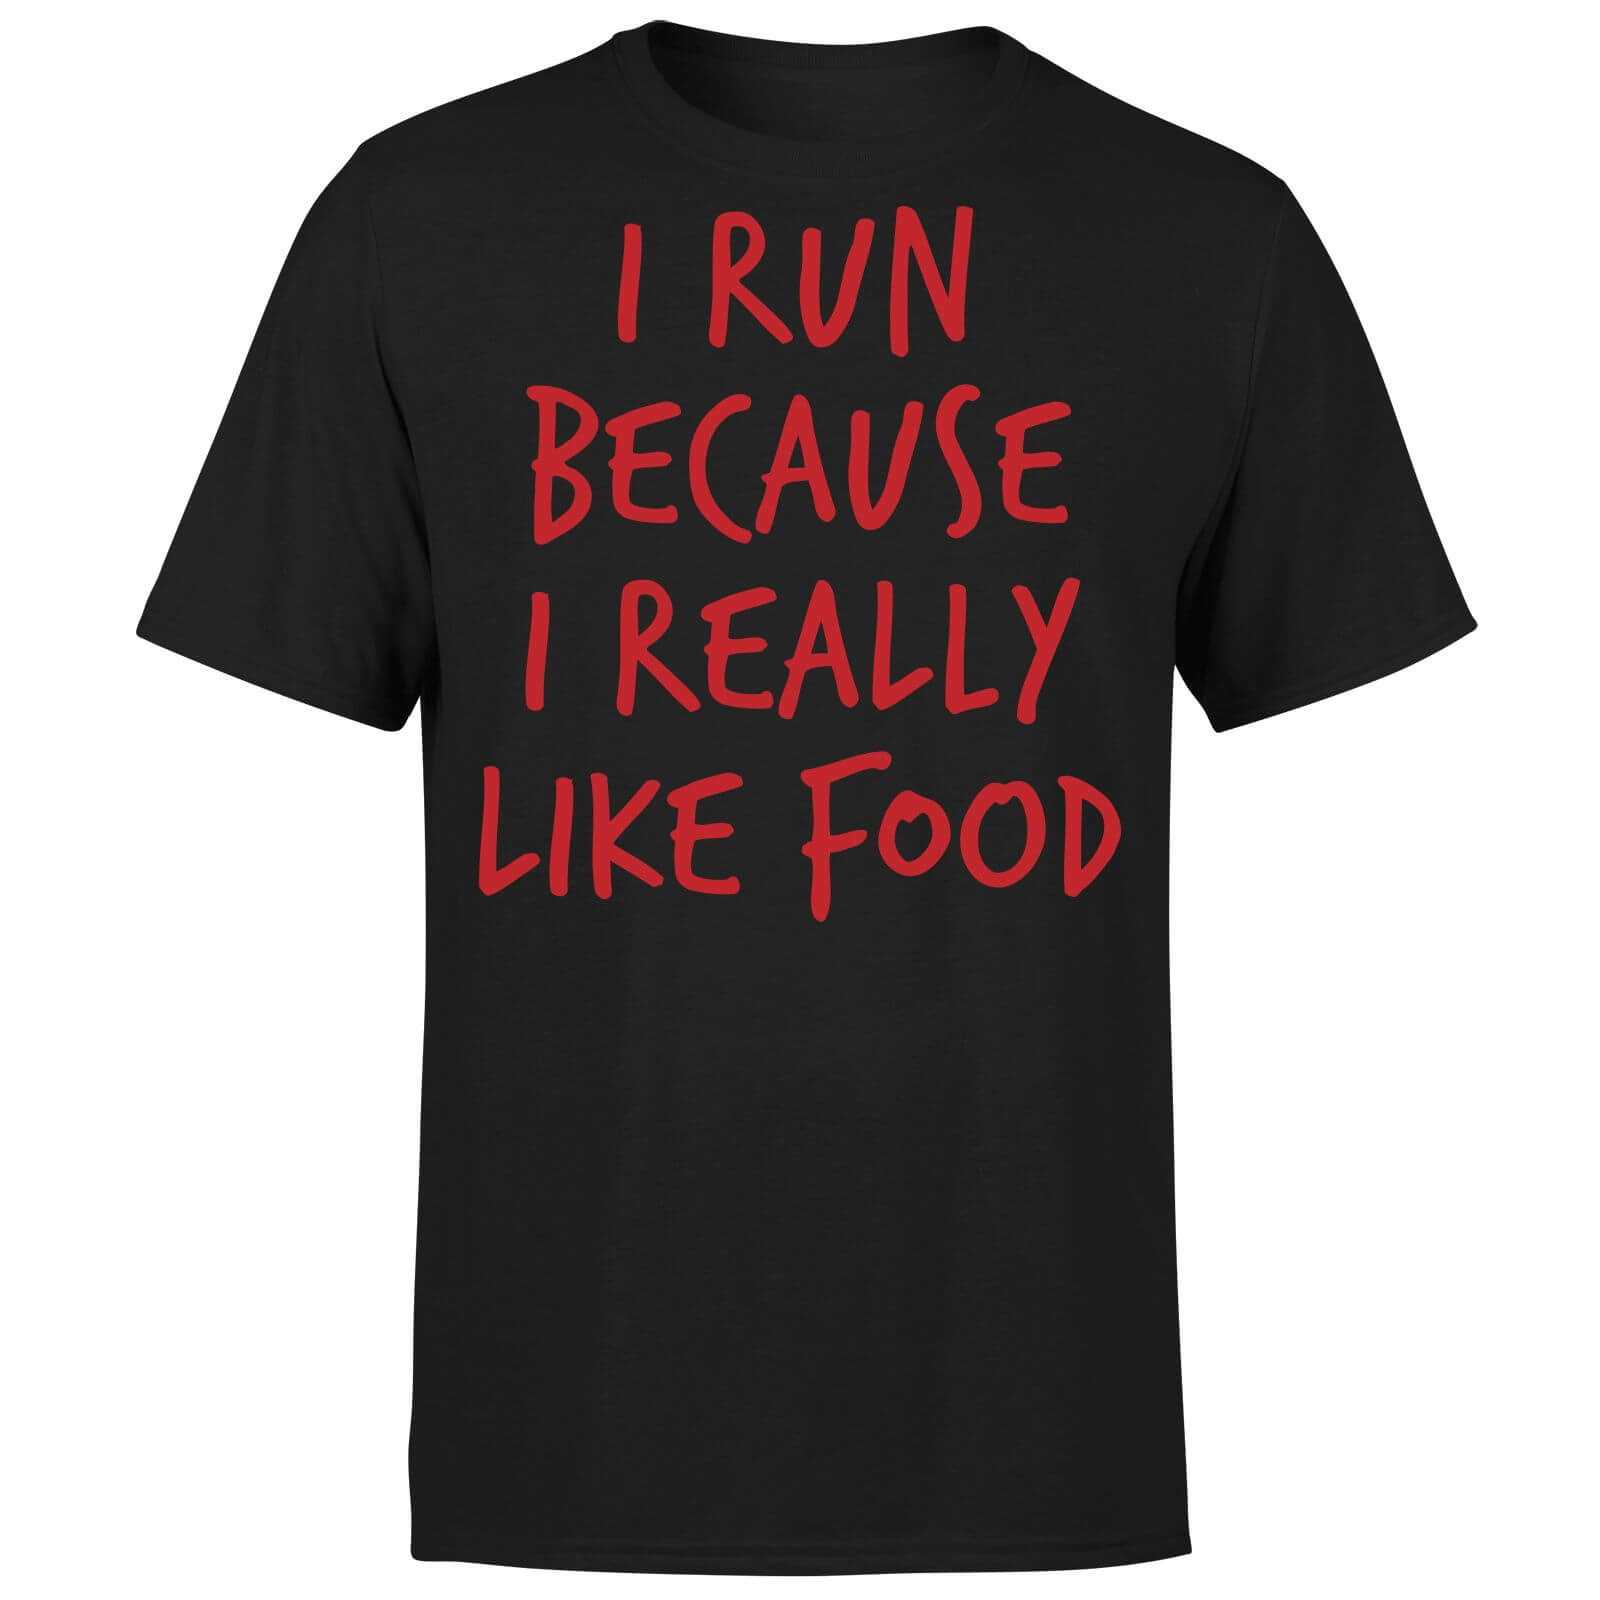 I Run Because I Really Like Food T-Shirt - Black - S - Black